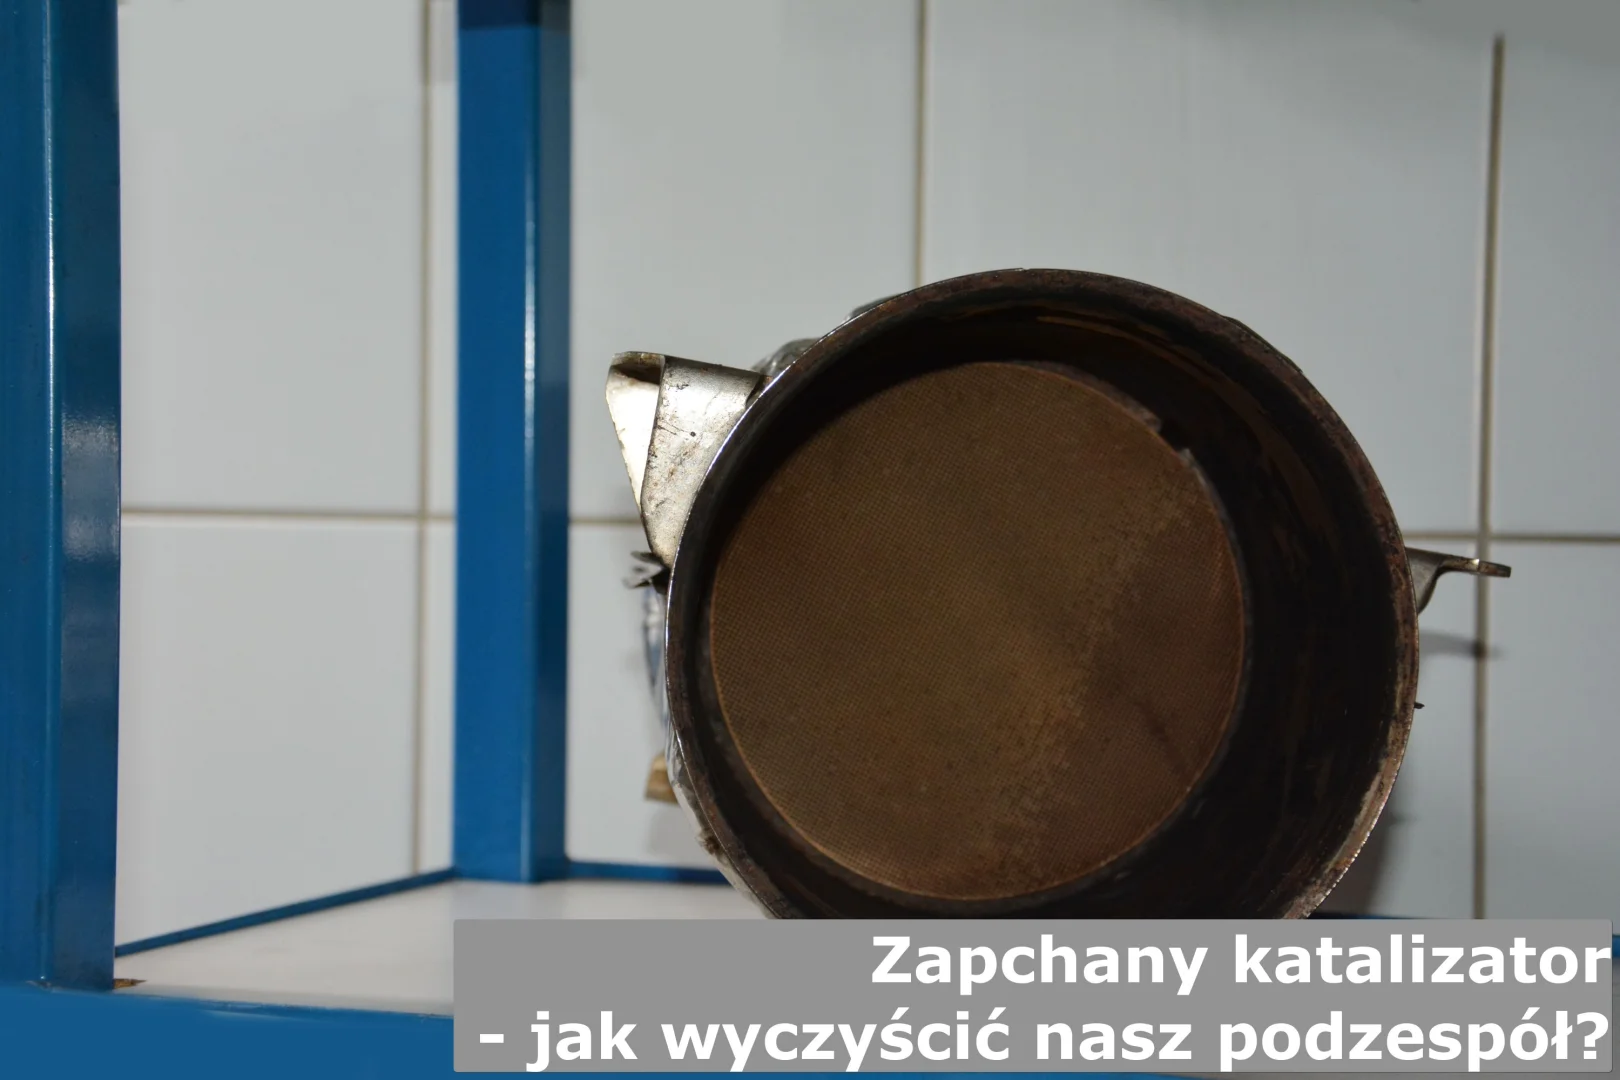 Zapchany katalizator